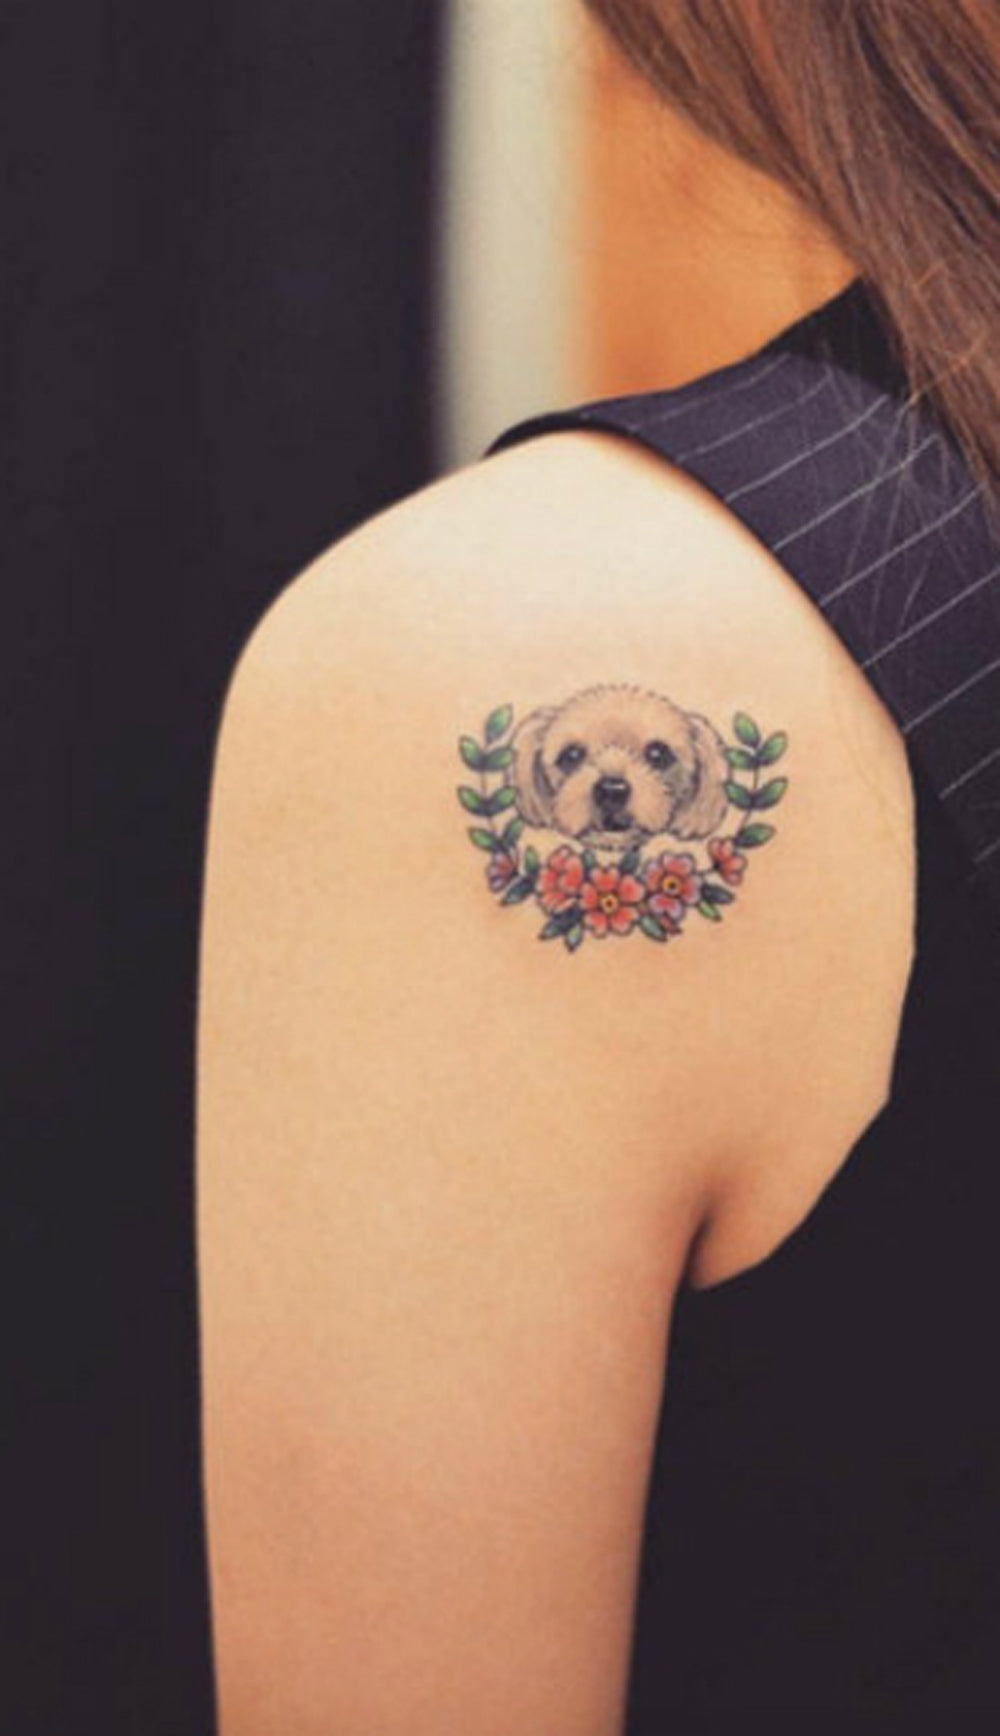 85+ Free Download Tattoo Simple Dog HD Tattoo Photos